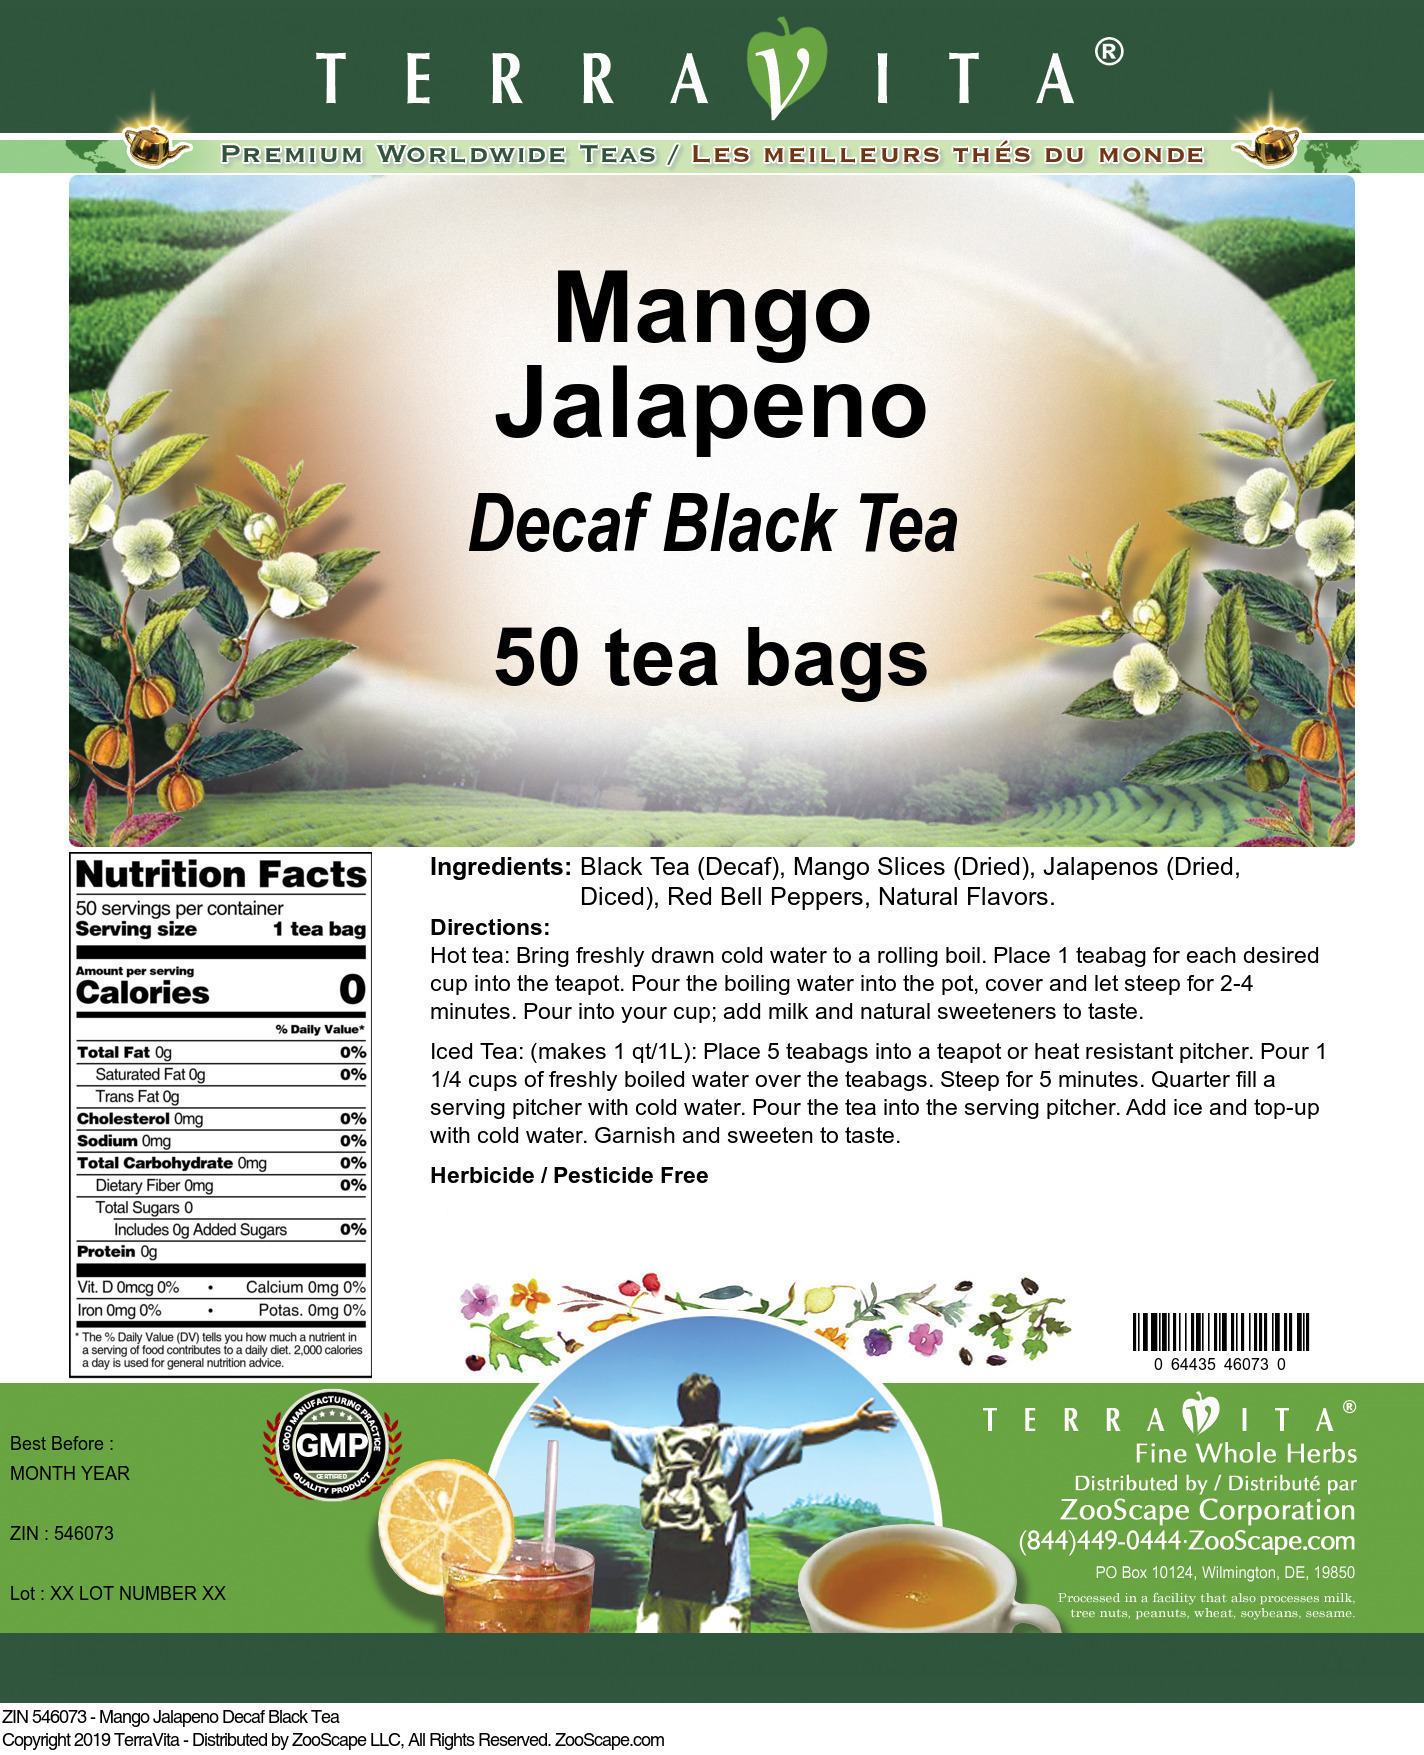 Mango Jalapeno Decaf Black Tea - Label